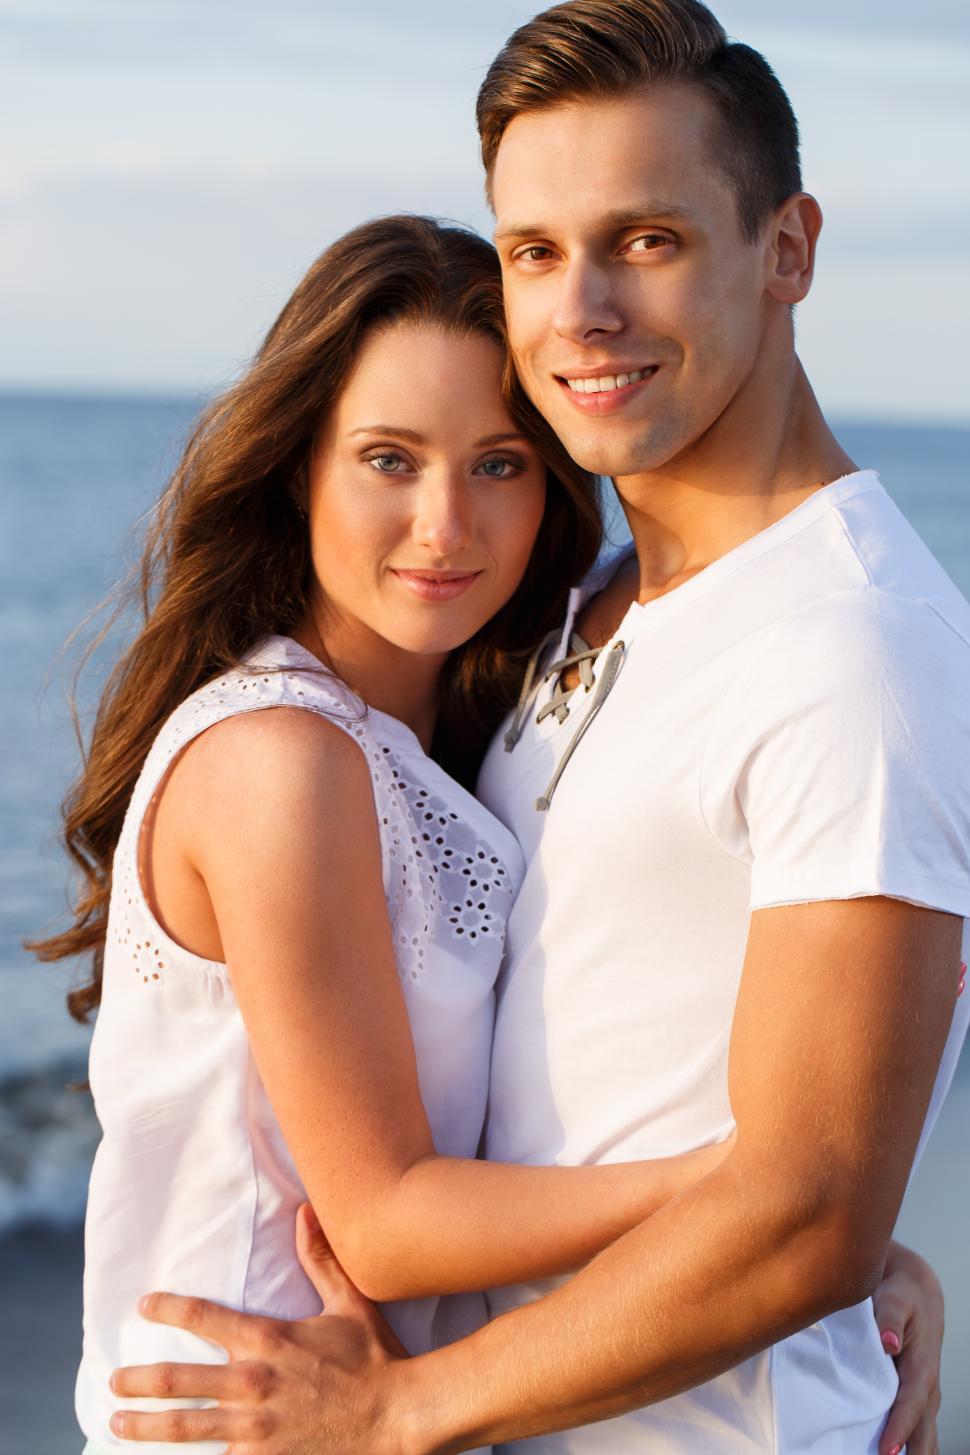 Free Image of Beautiful couple pose on the beach 